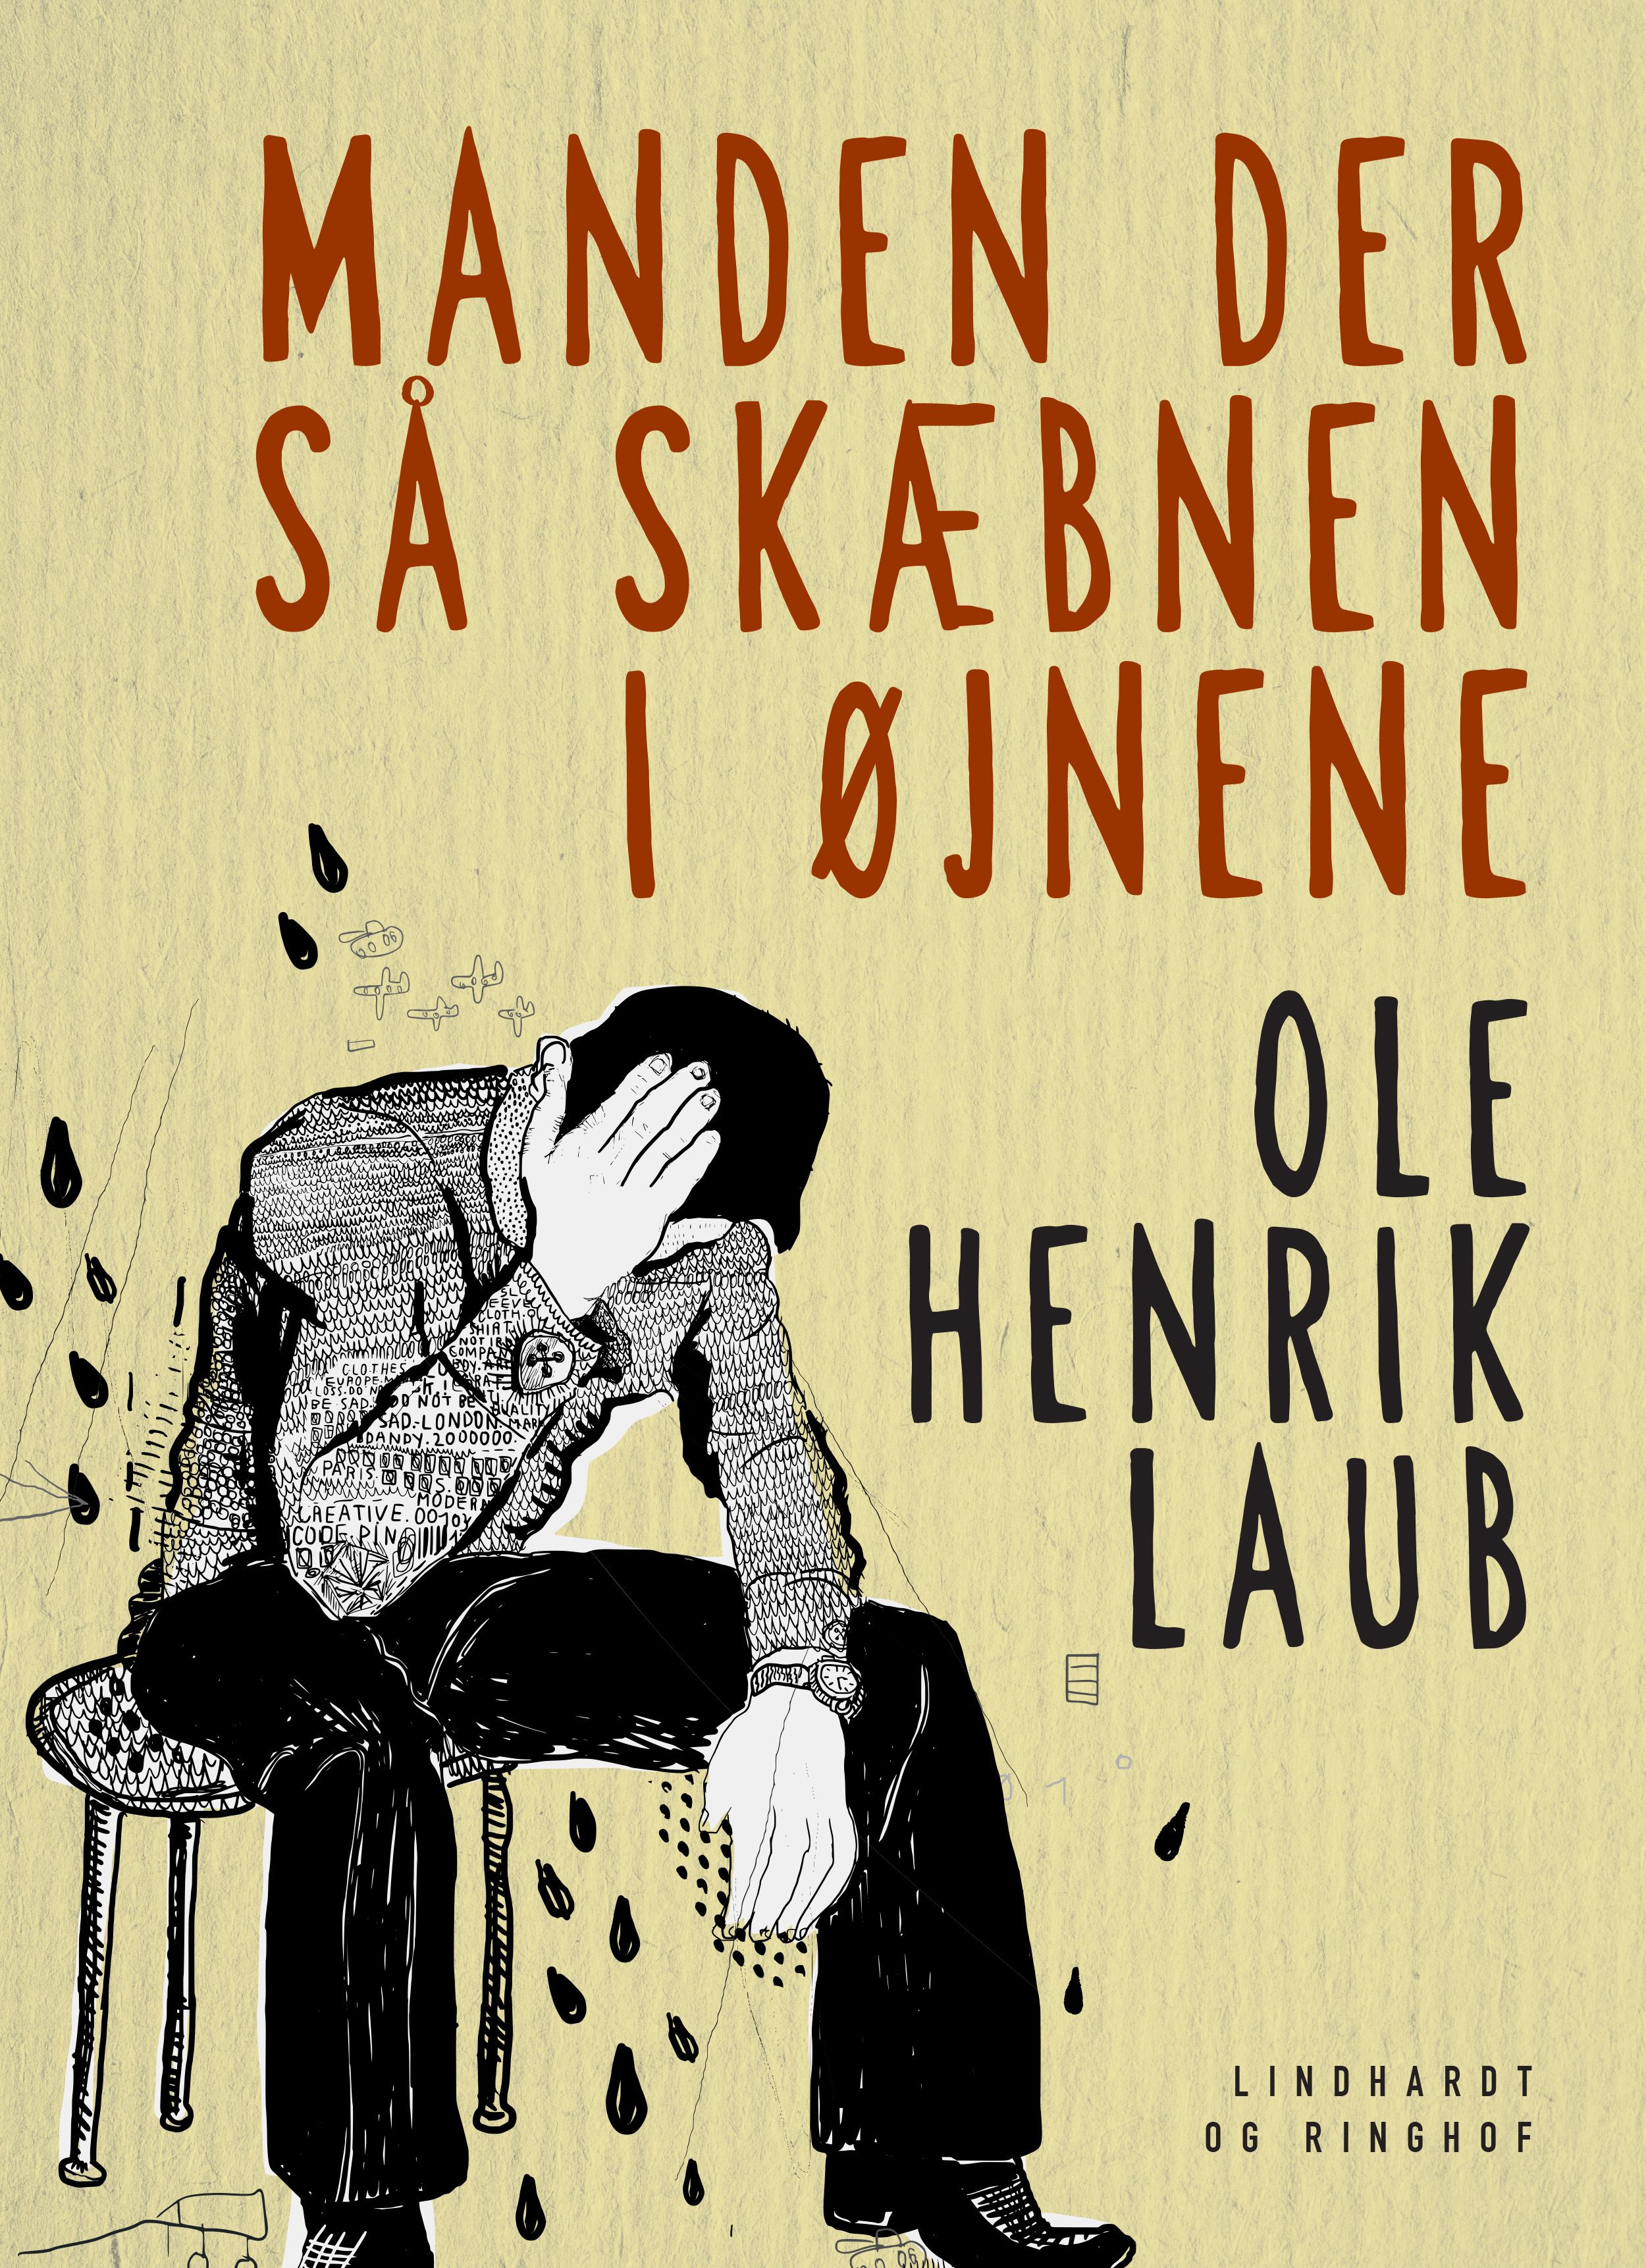 Manden der så skæbnen i øjnene, ljudbok av Ole Henrik Laub